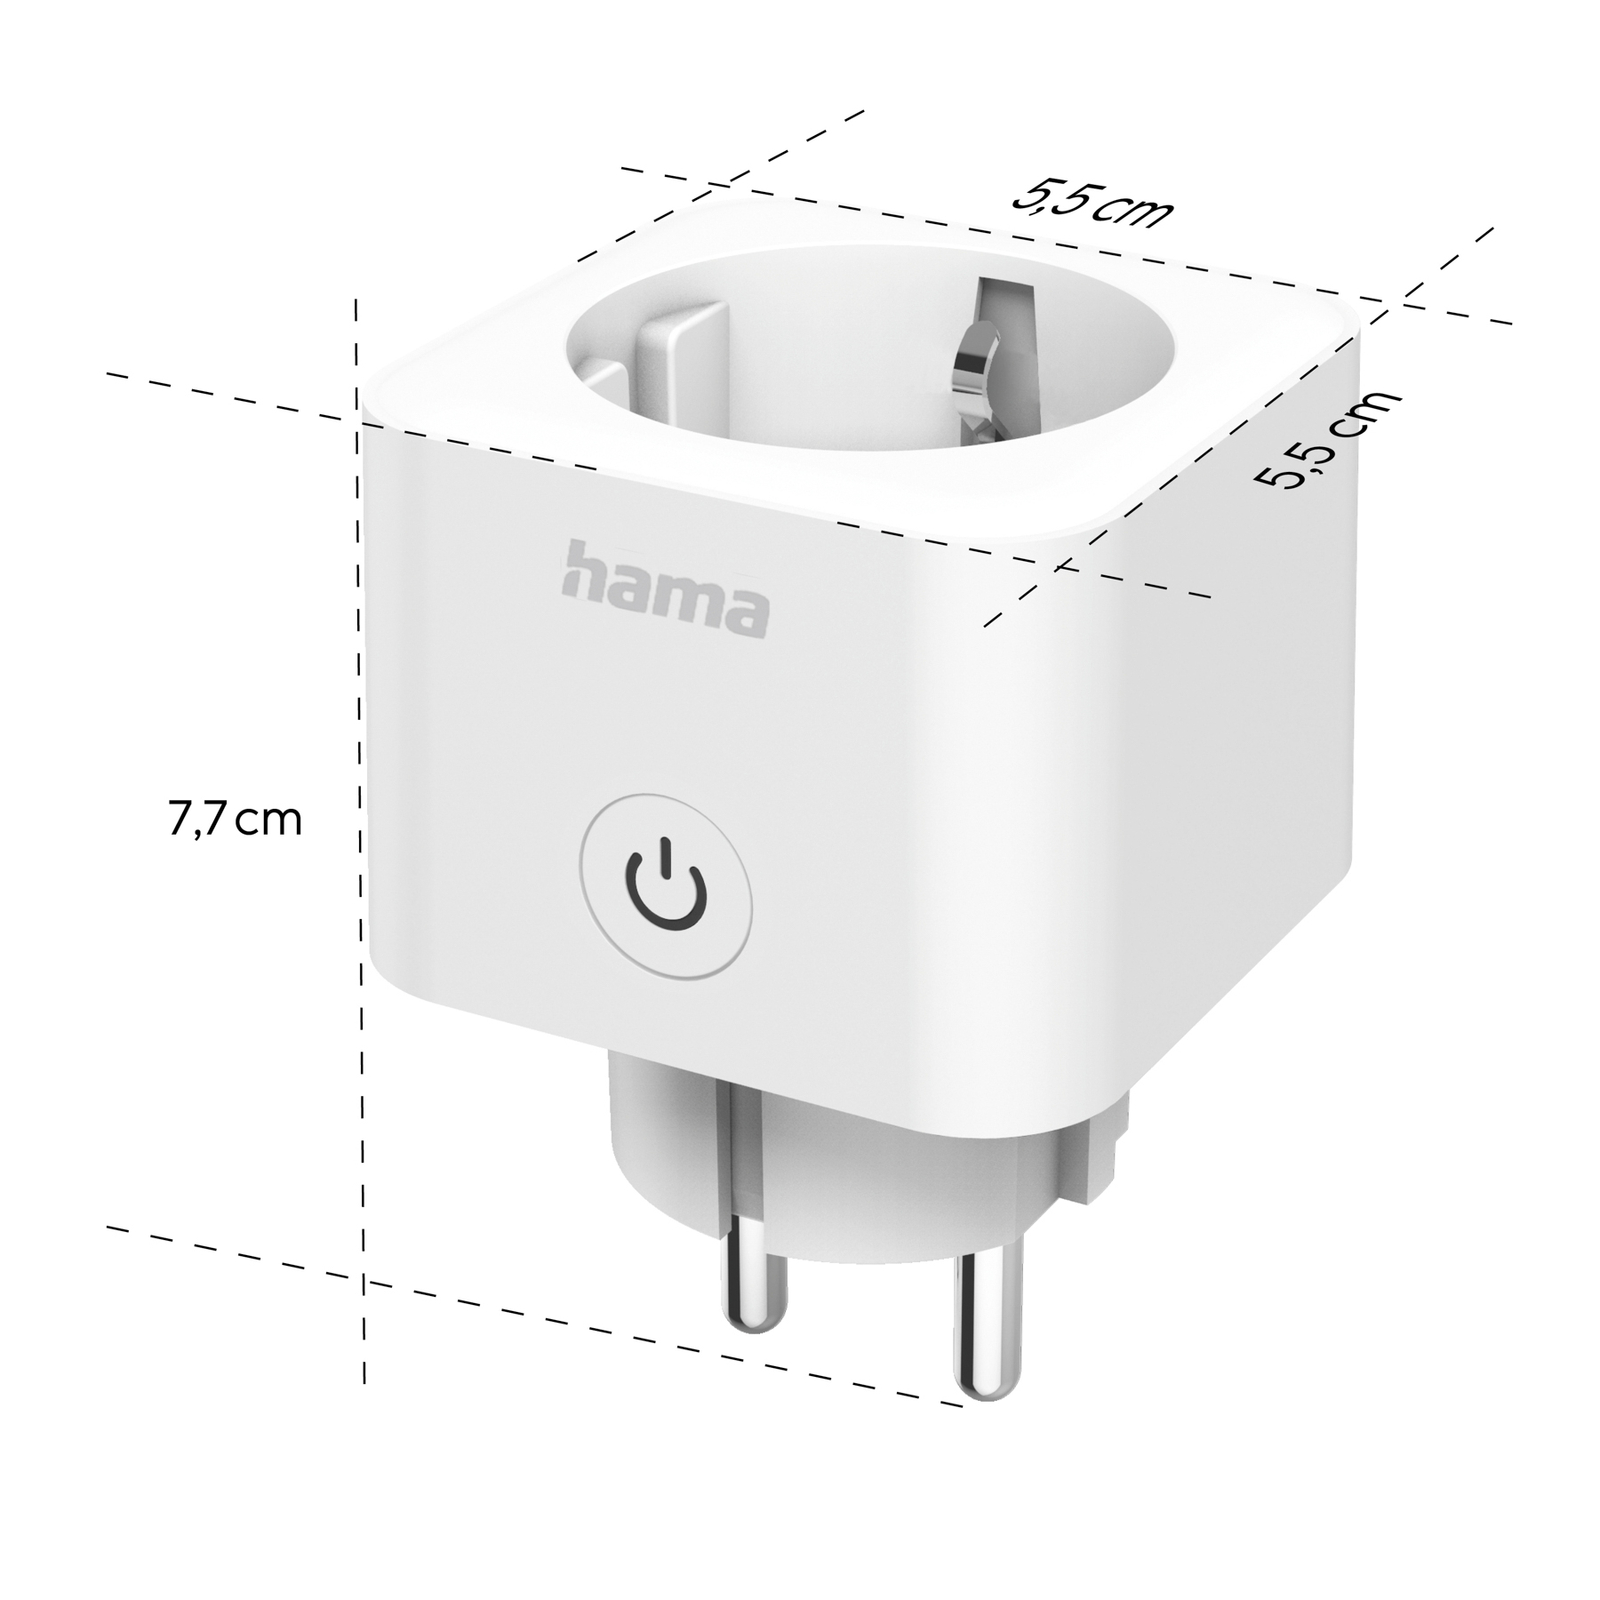 Hama WLAN konnektor Smart, Matter-képes, fehér, 3,680 W